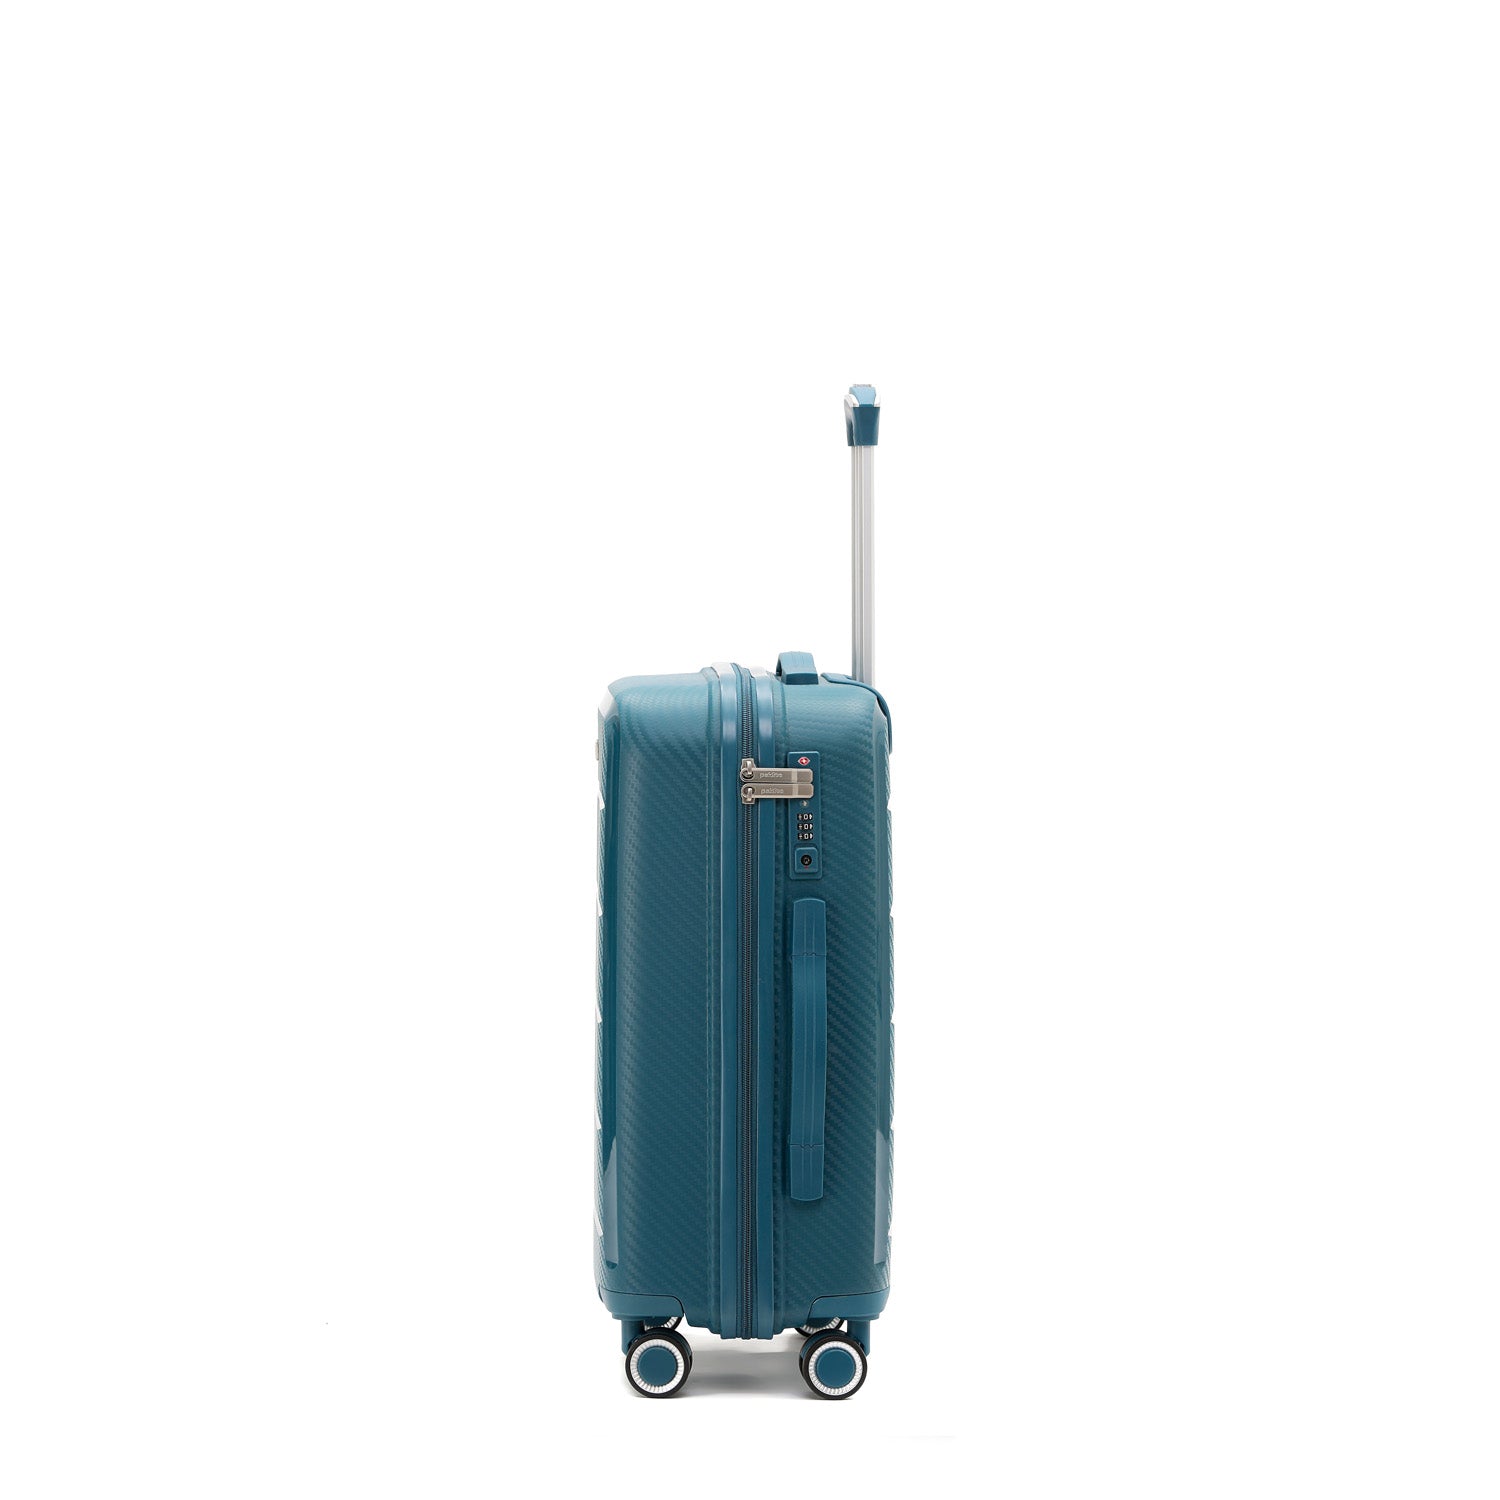 Paklite - PA7350 Set of 3 Suitcases - Blue-18